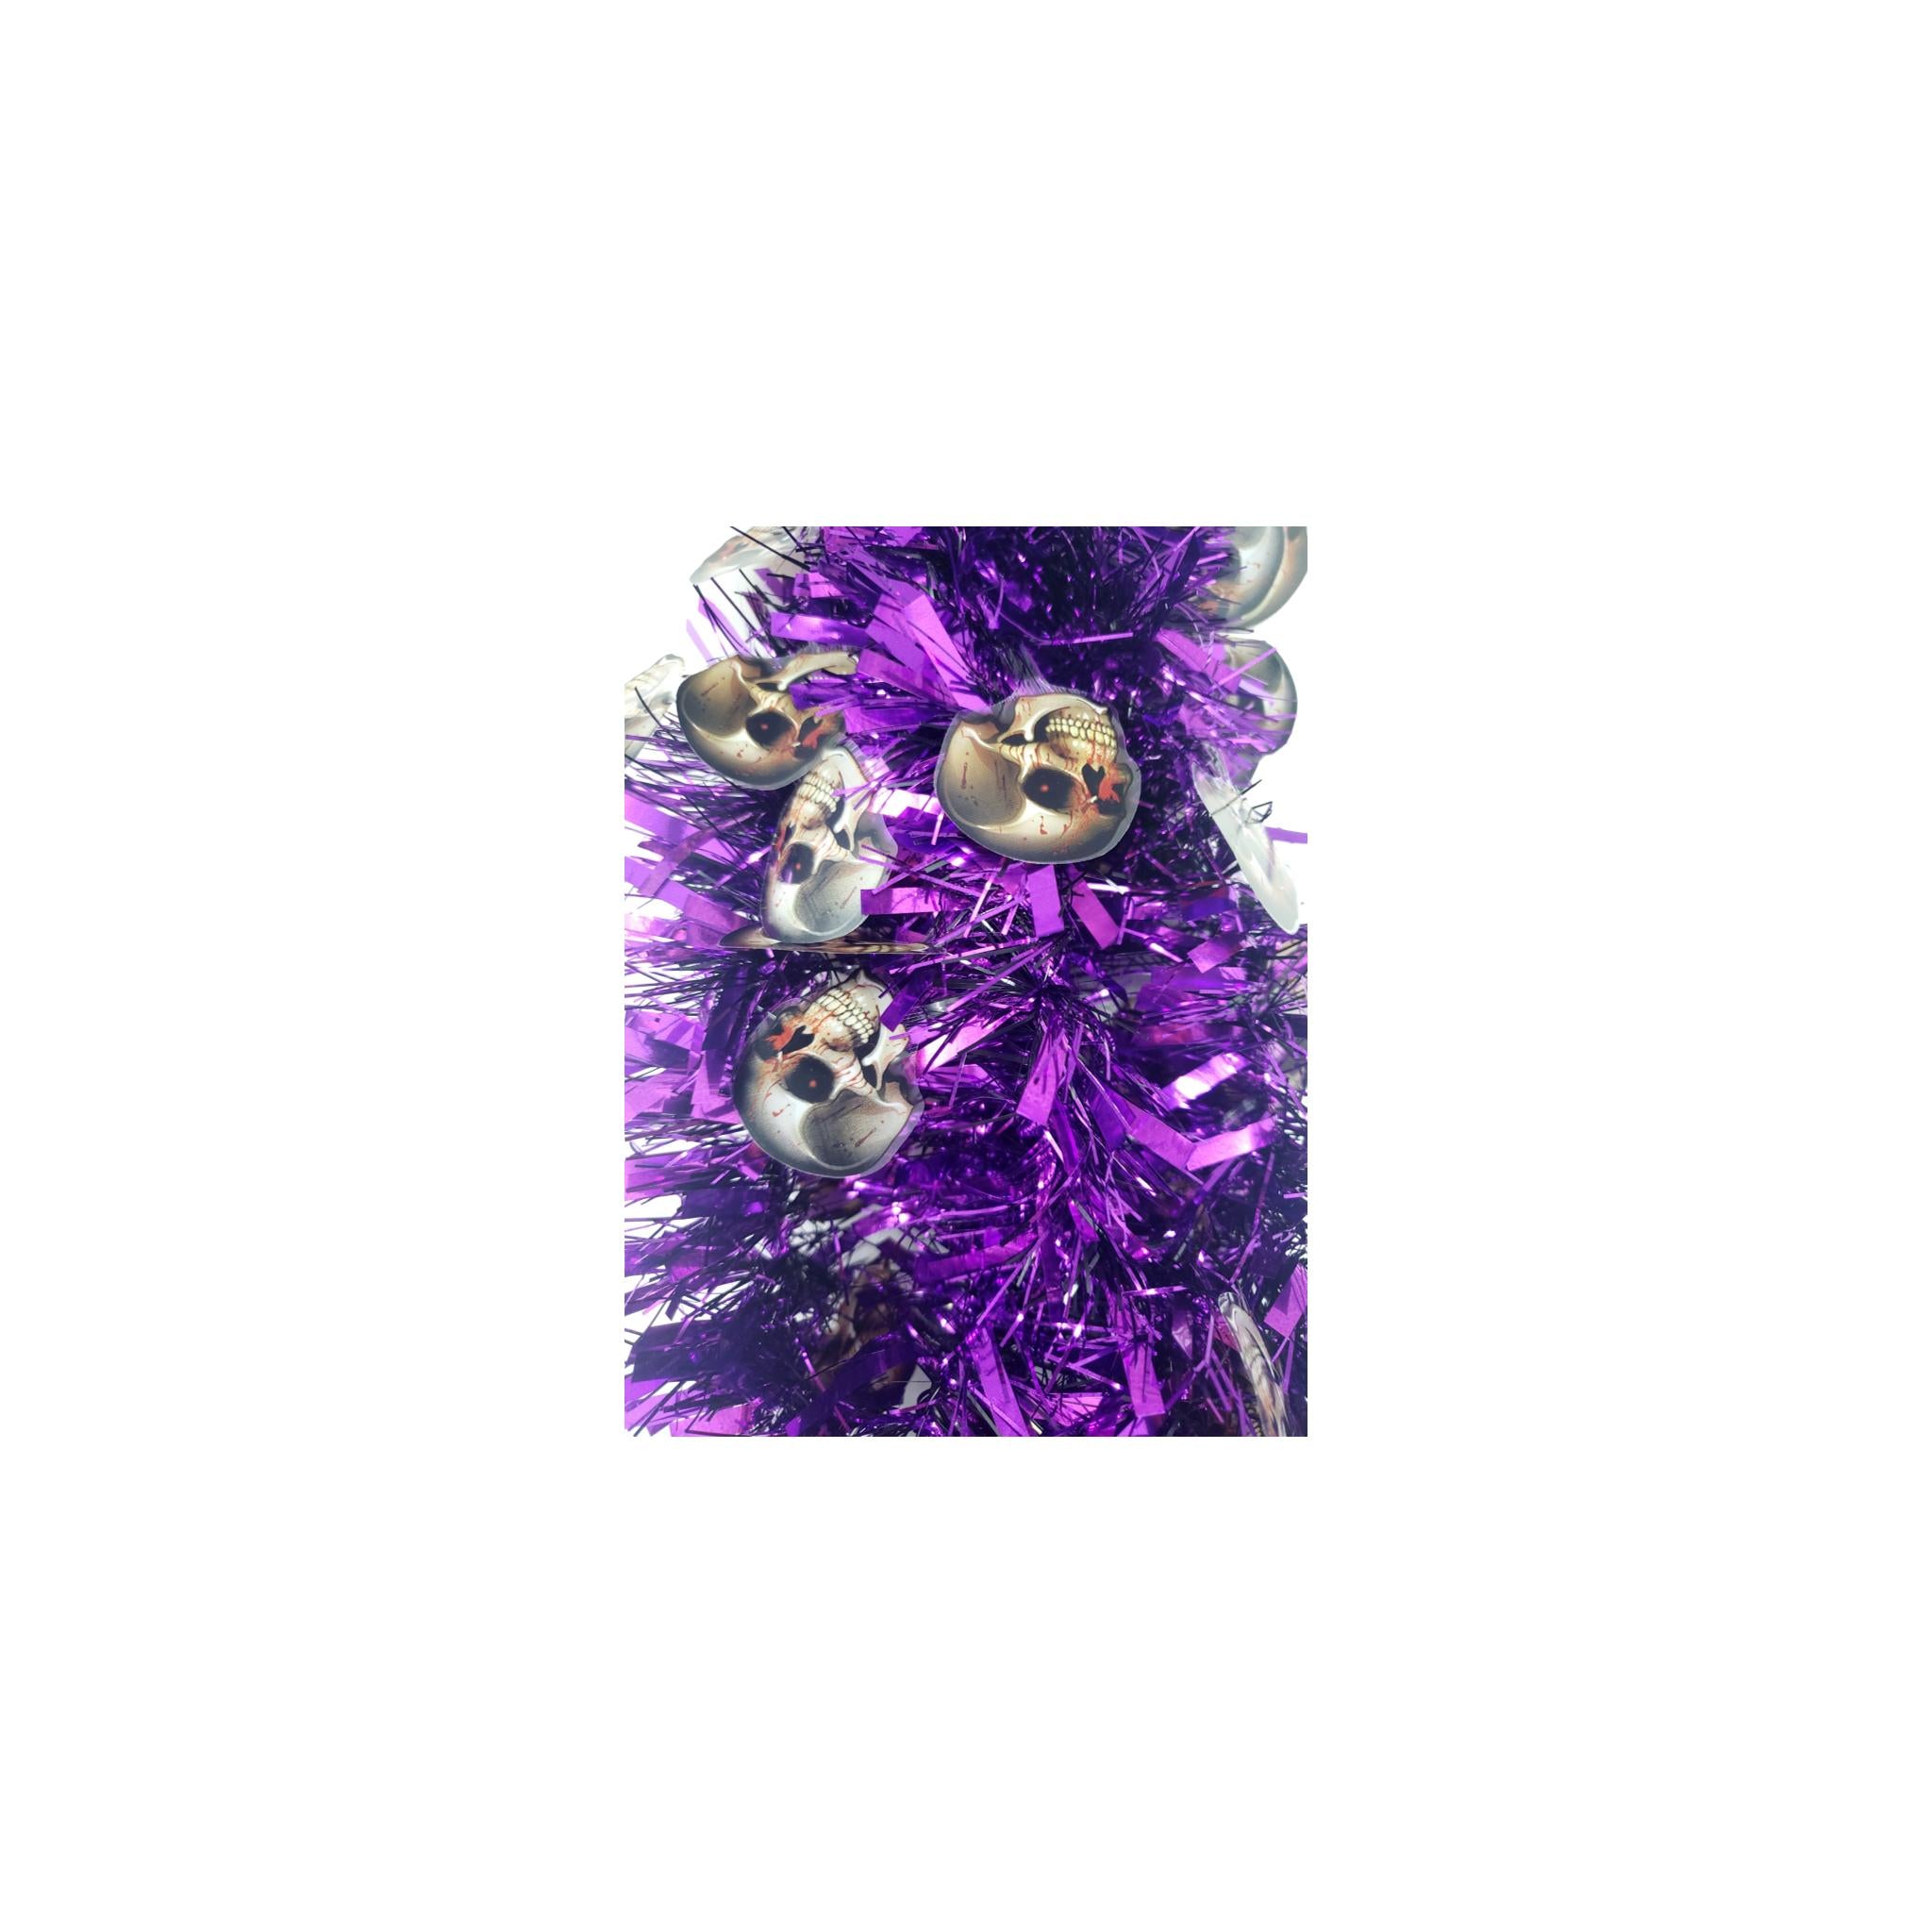 Halloween Tinsel Skinny Purple Garland with Skulls 9 Feet Long – 2 Pack